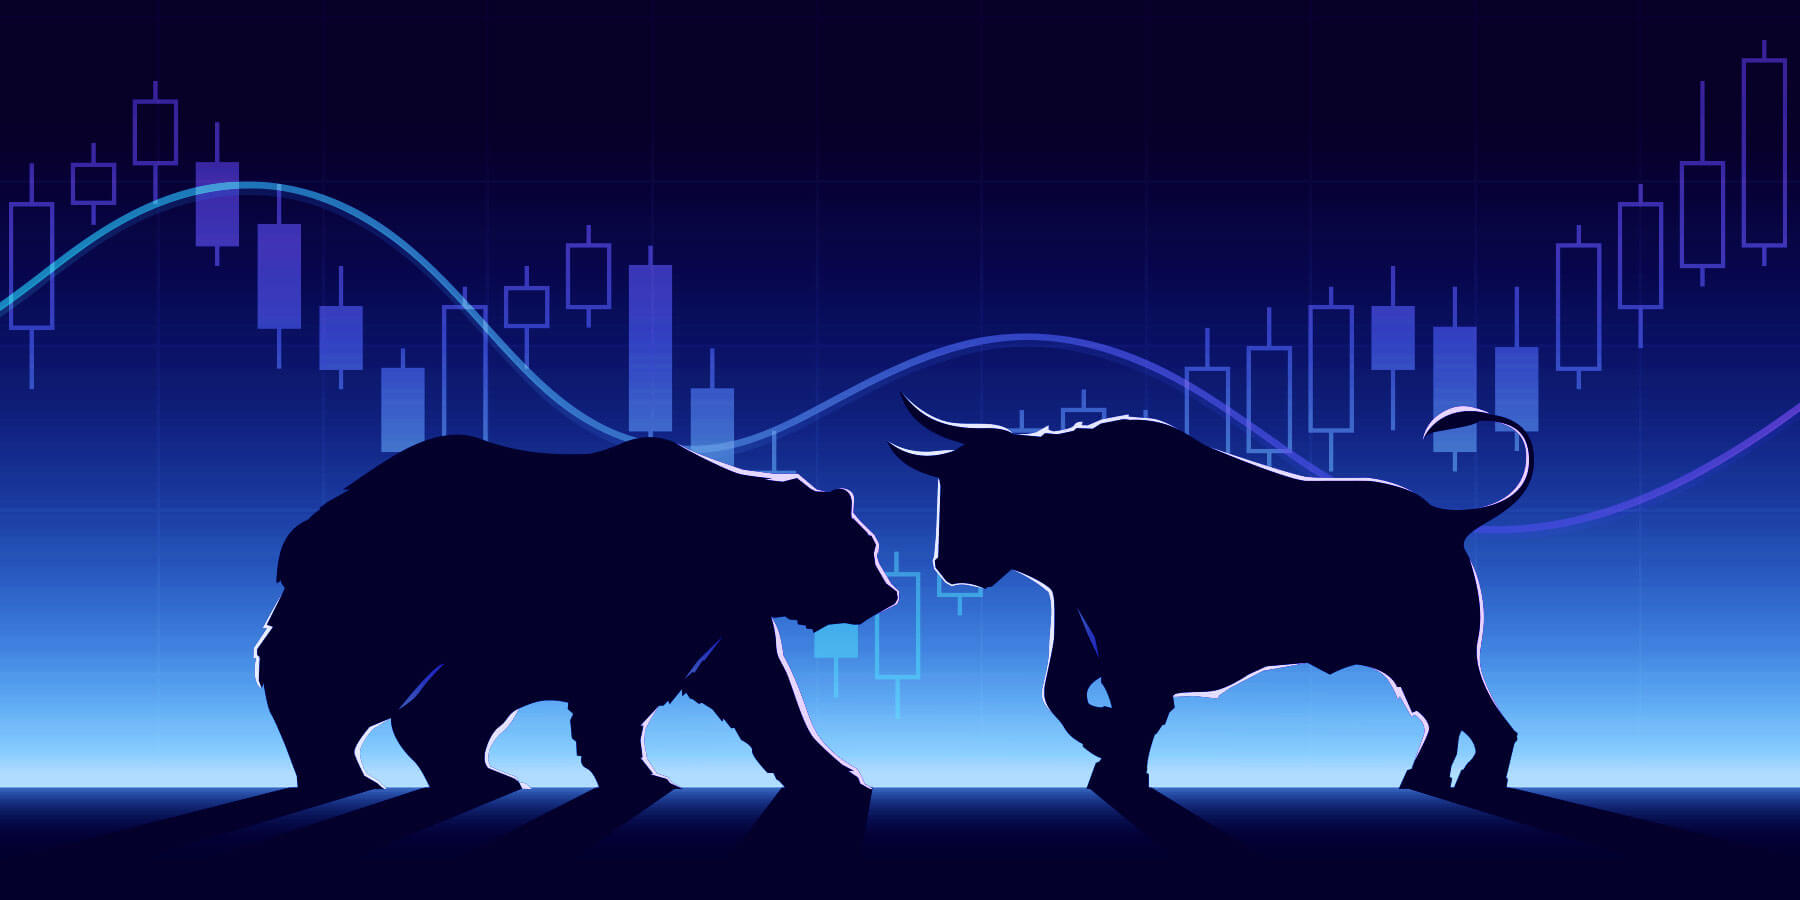 Символ биржи бык и медведь